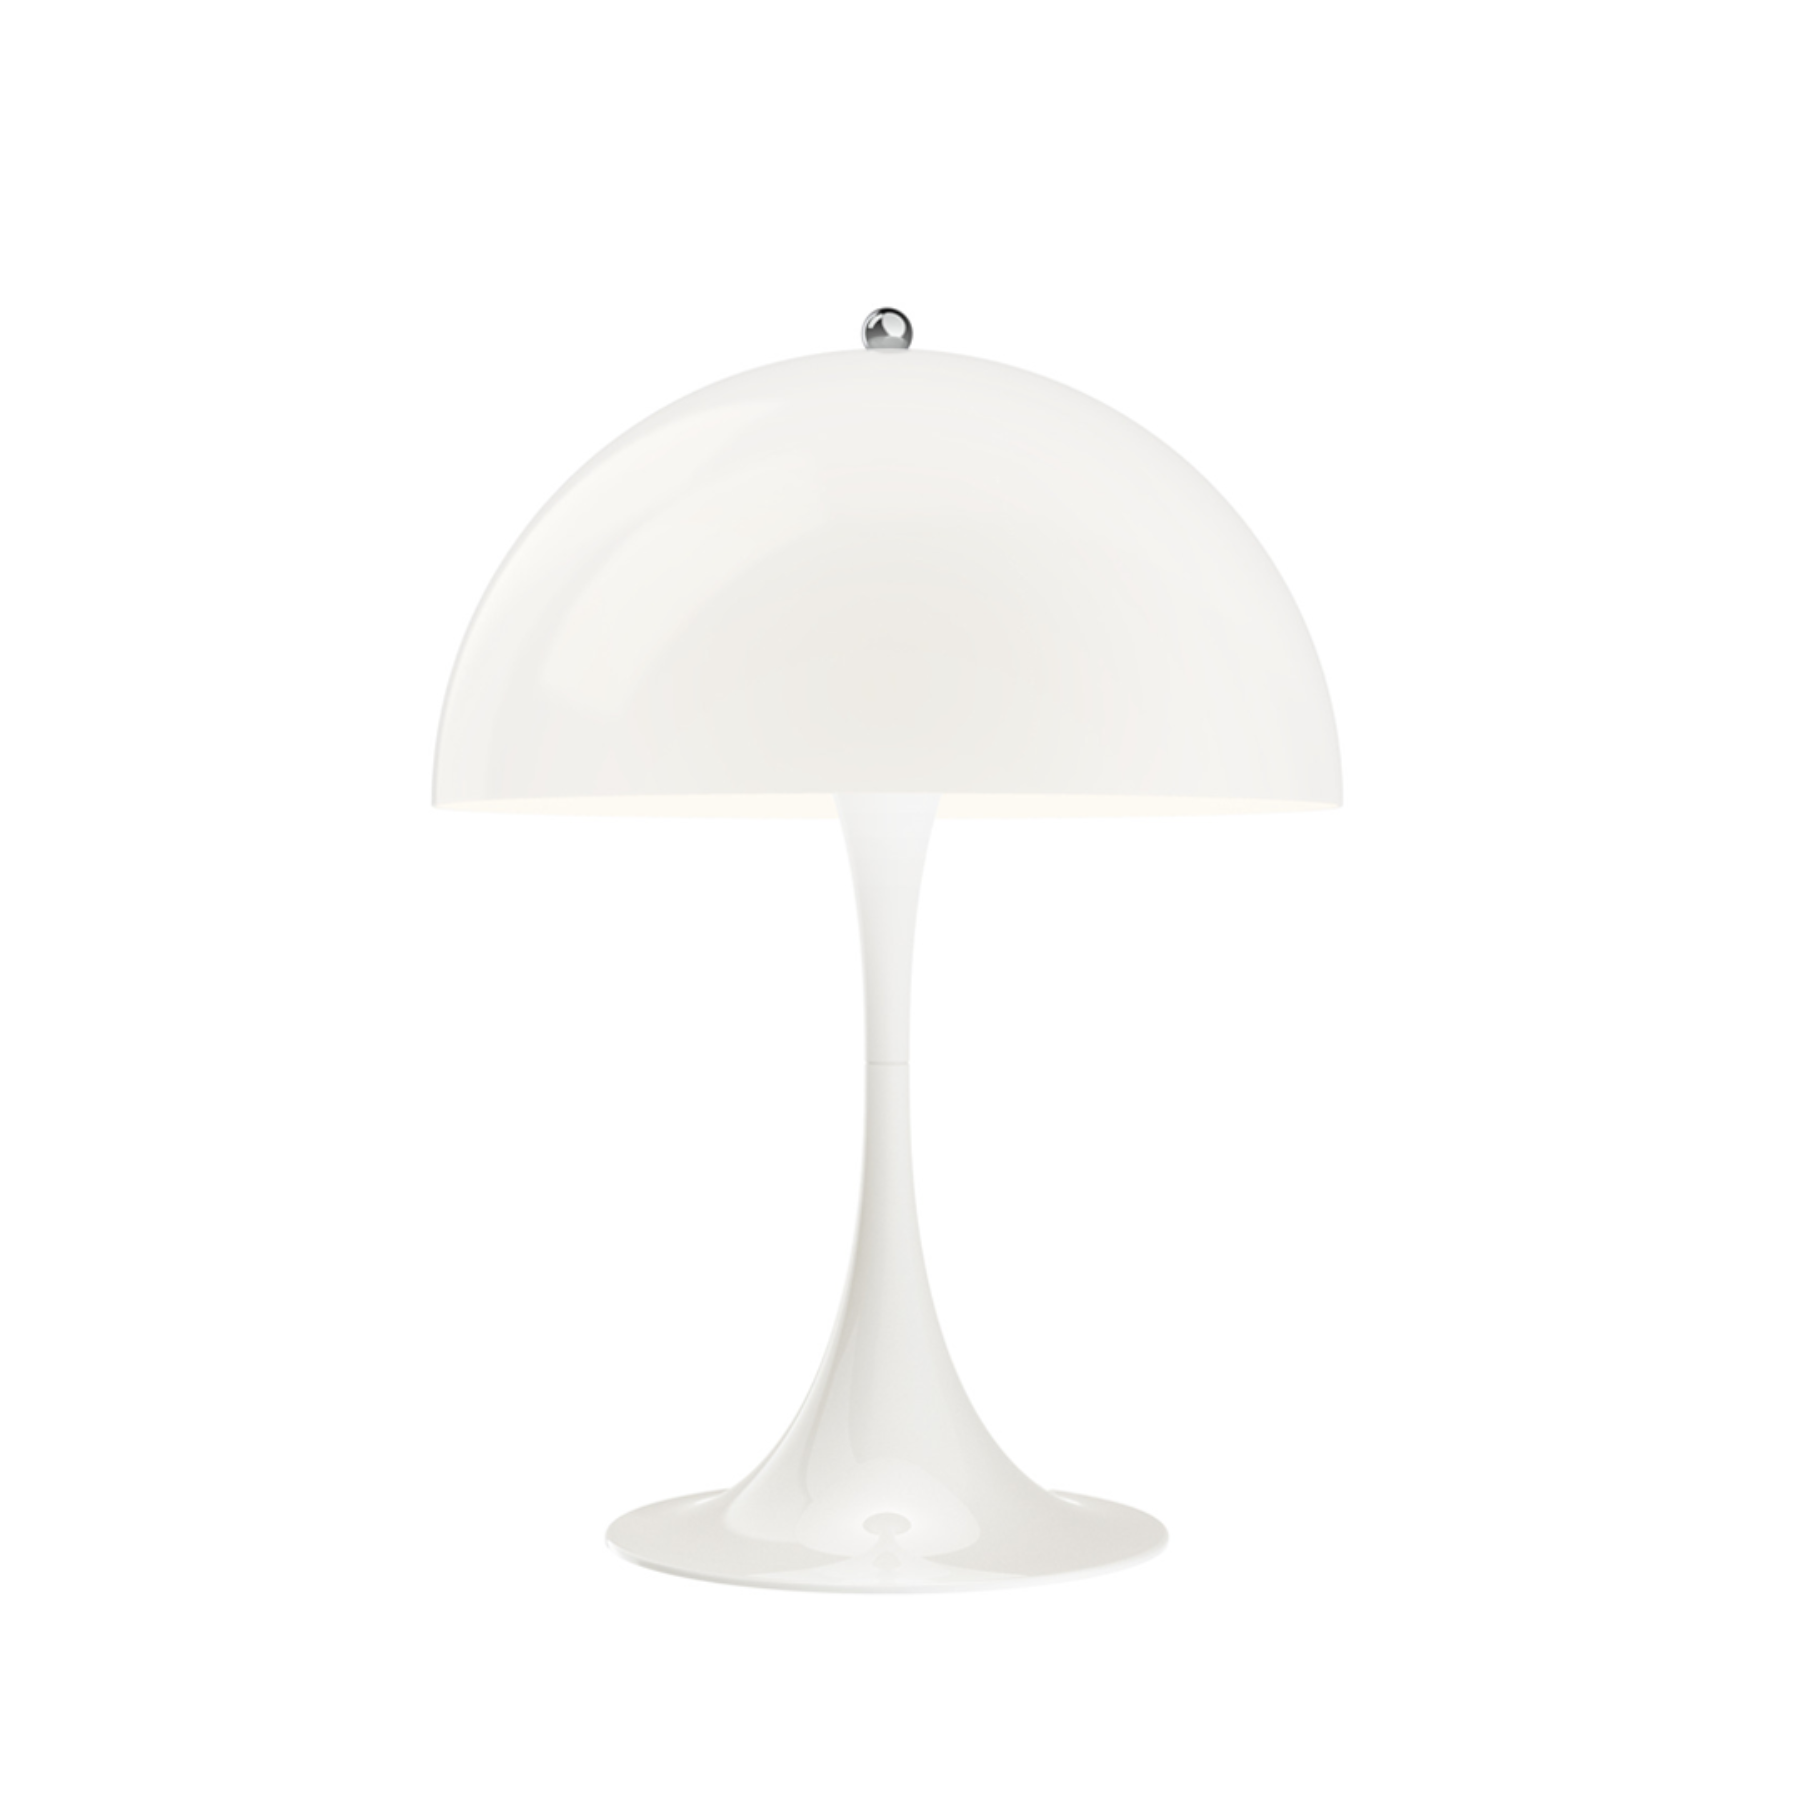 Panthella 320 Table Lamp Opal white 판텔라 320 테이블 램프 오팔 화이트